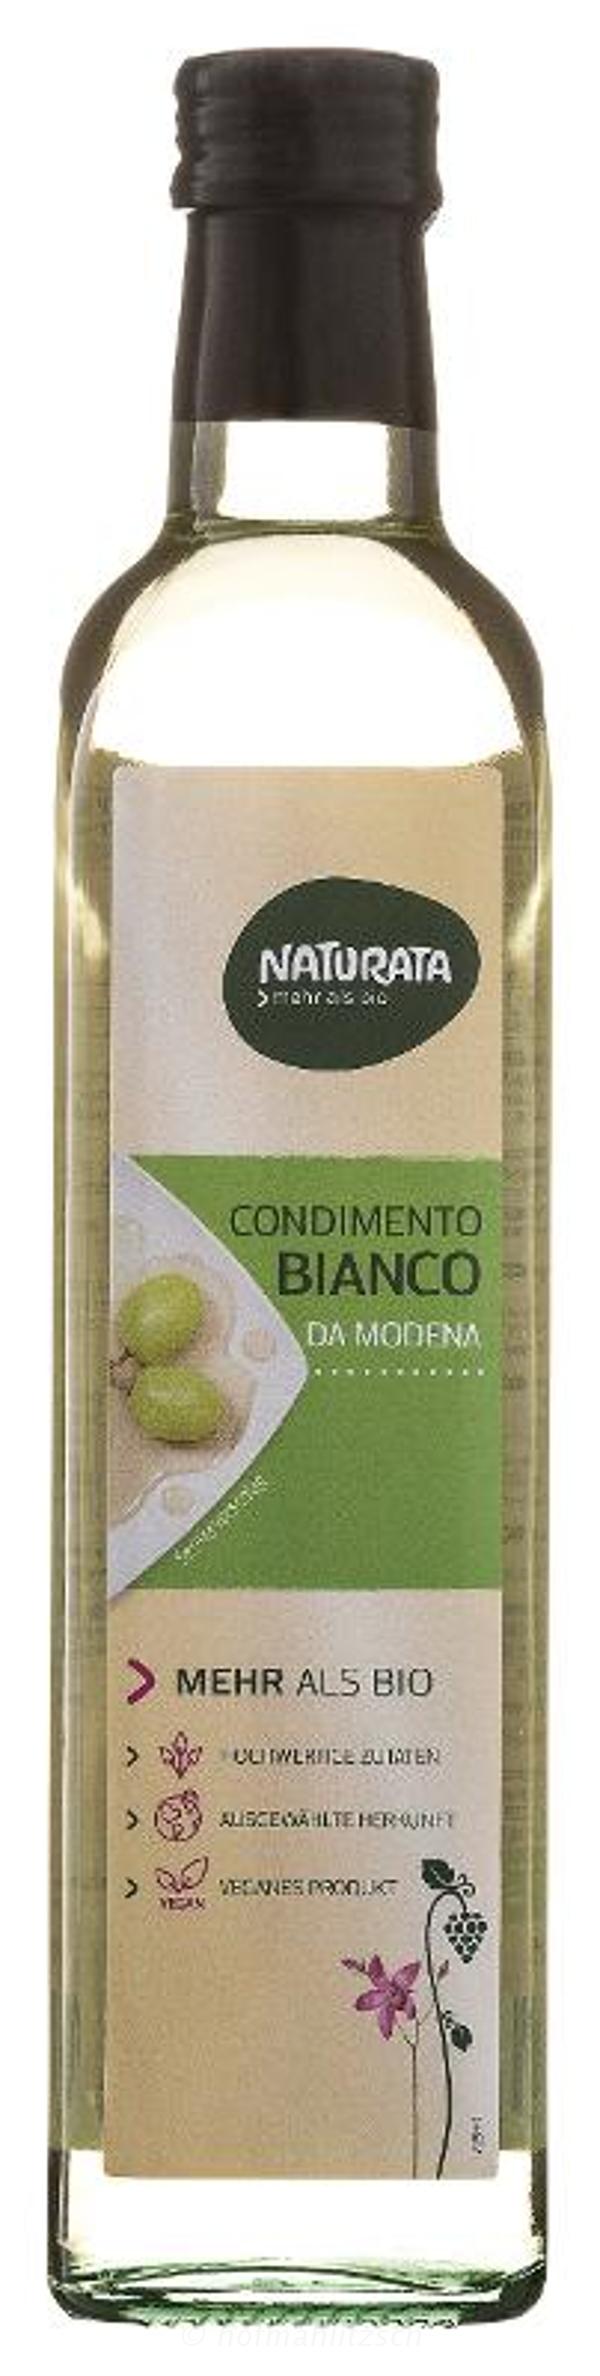 Produktfoto zu Balsamico Bianco Condimento